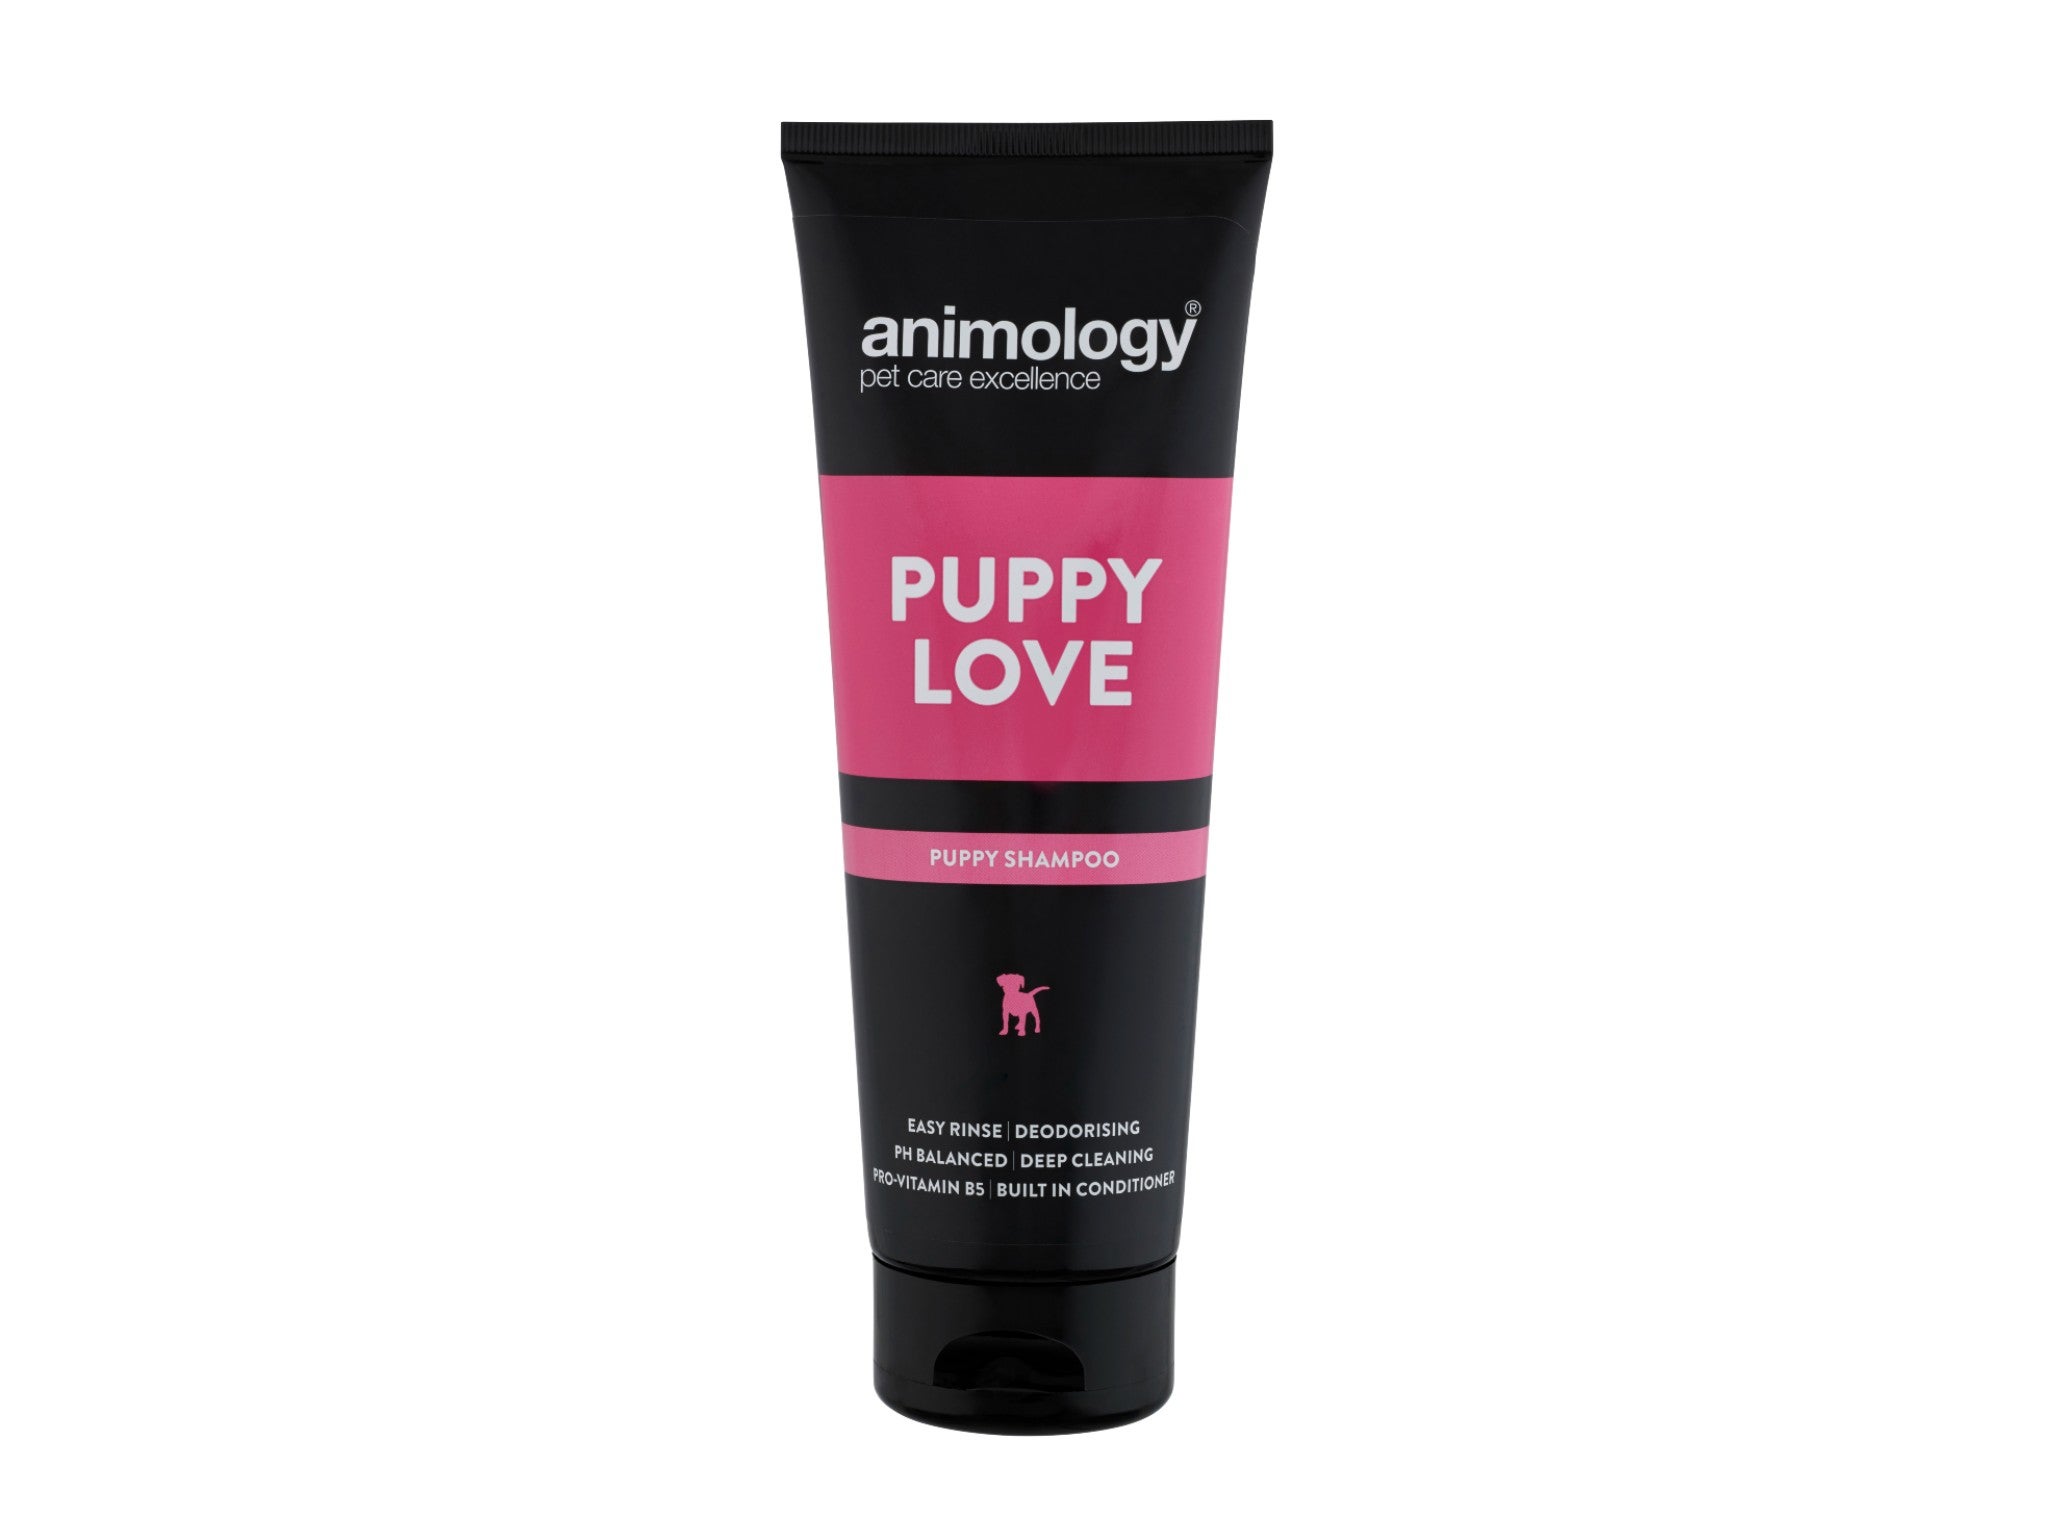 Animology puppy love shampoo indybest.jpeg